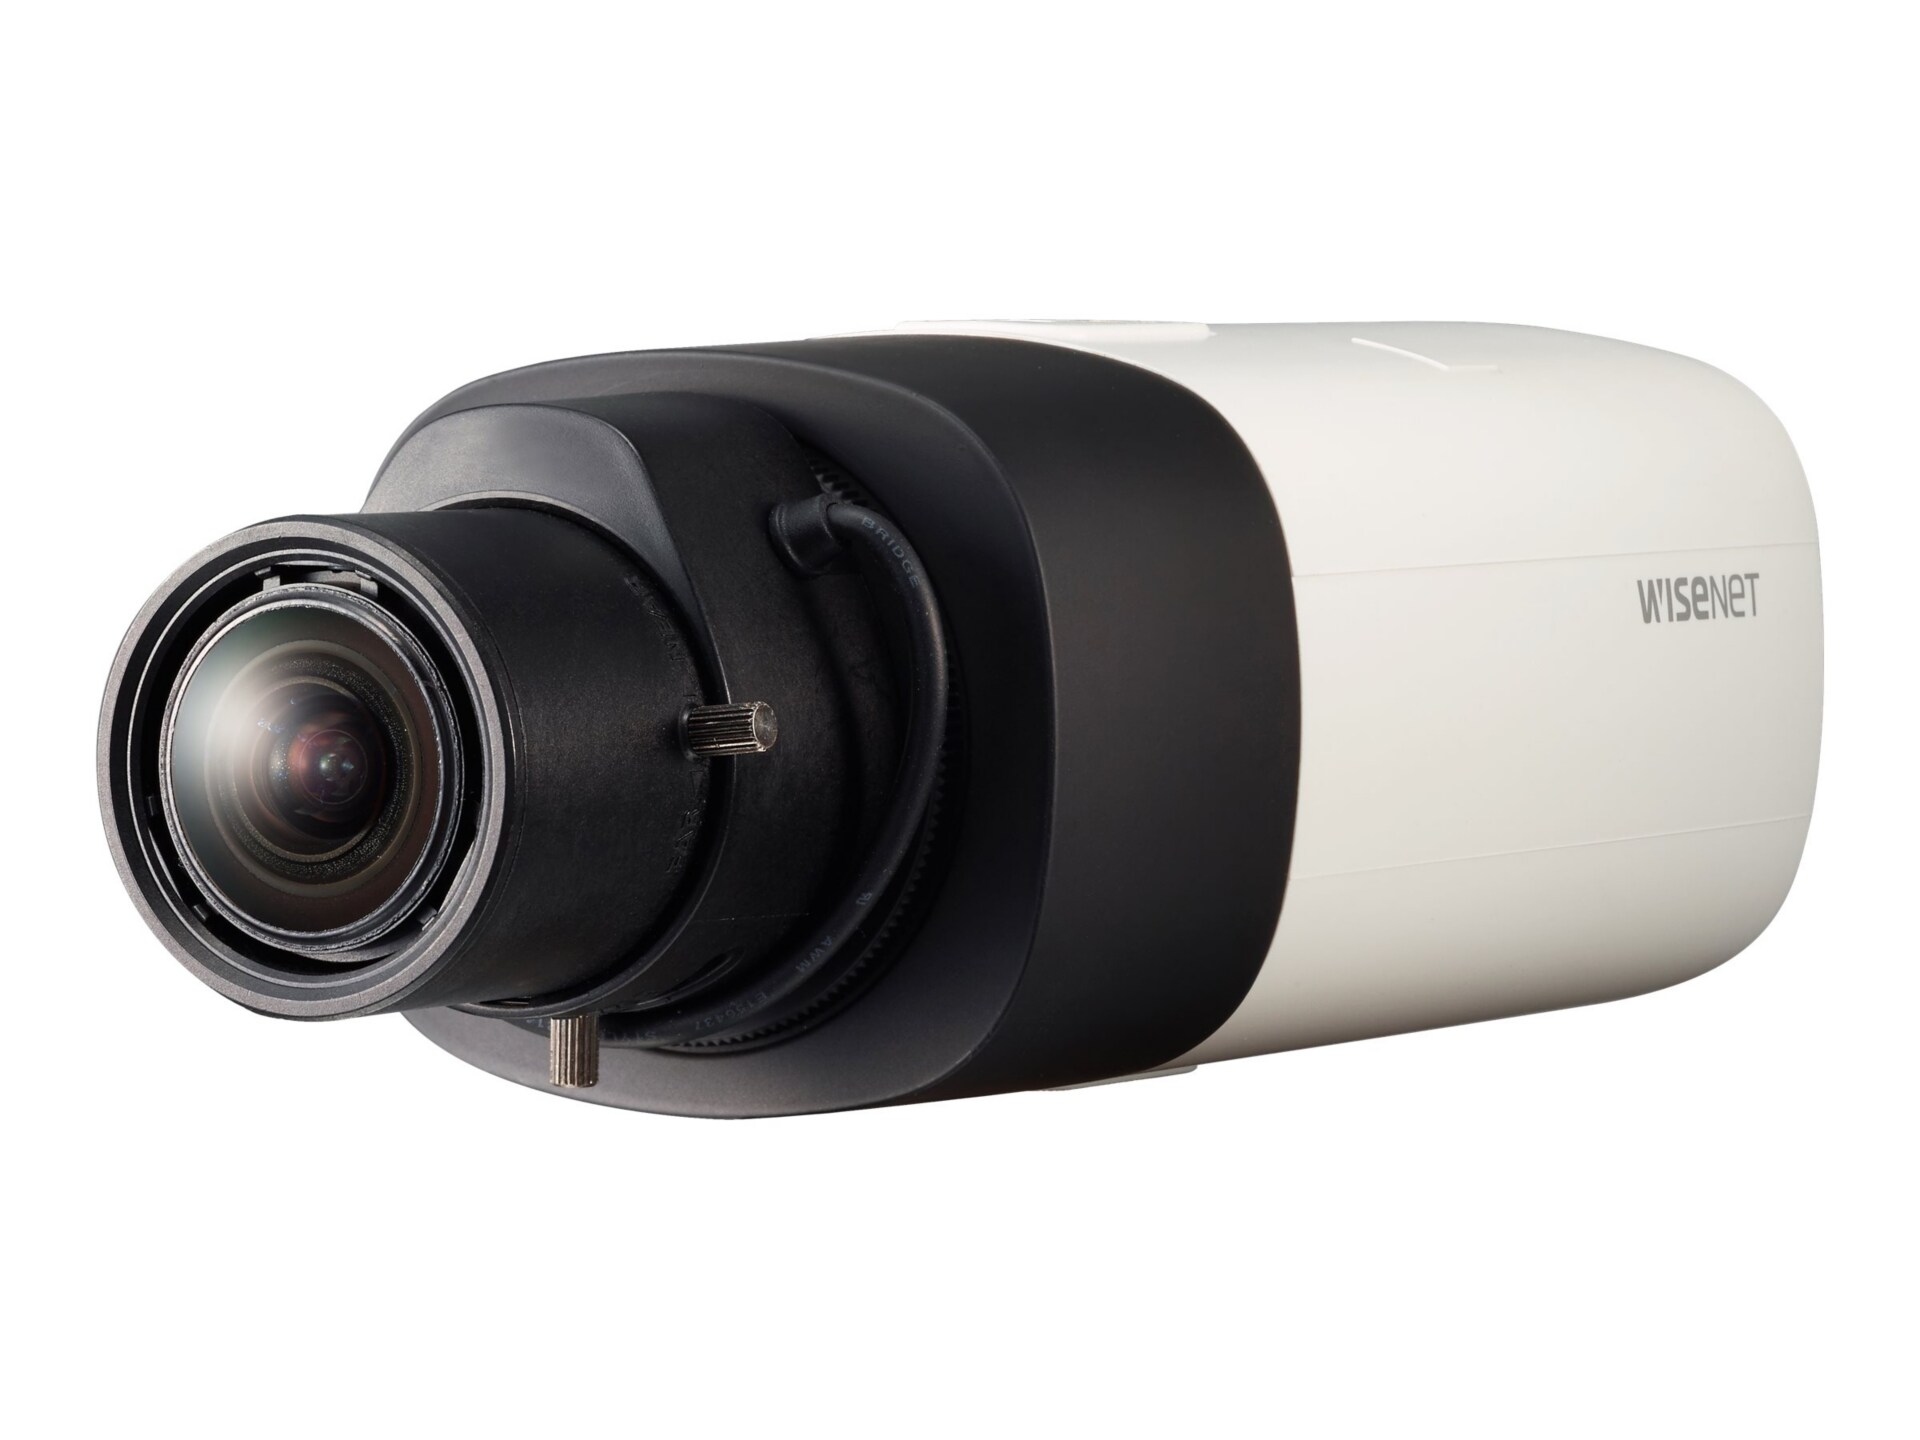 Samsung WiseNet X XNB-6000 - network surveillance camera (no lens)